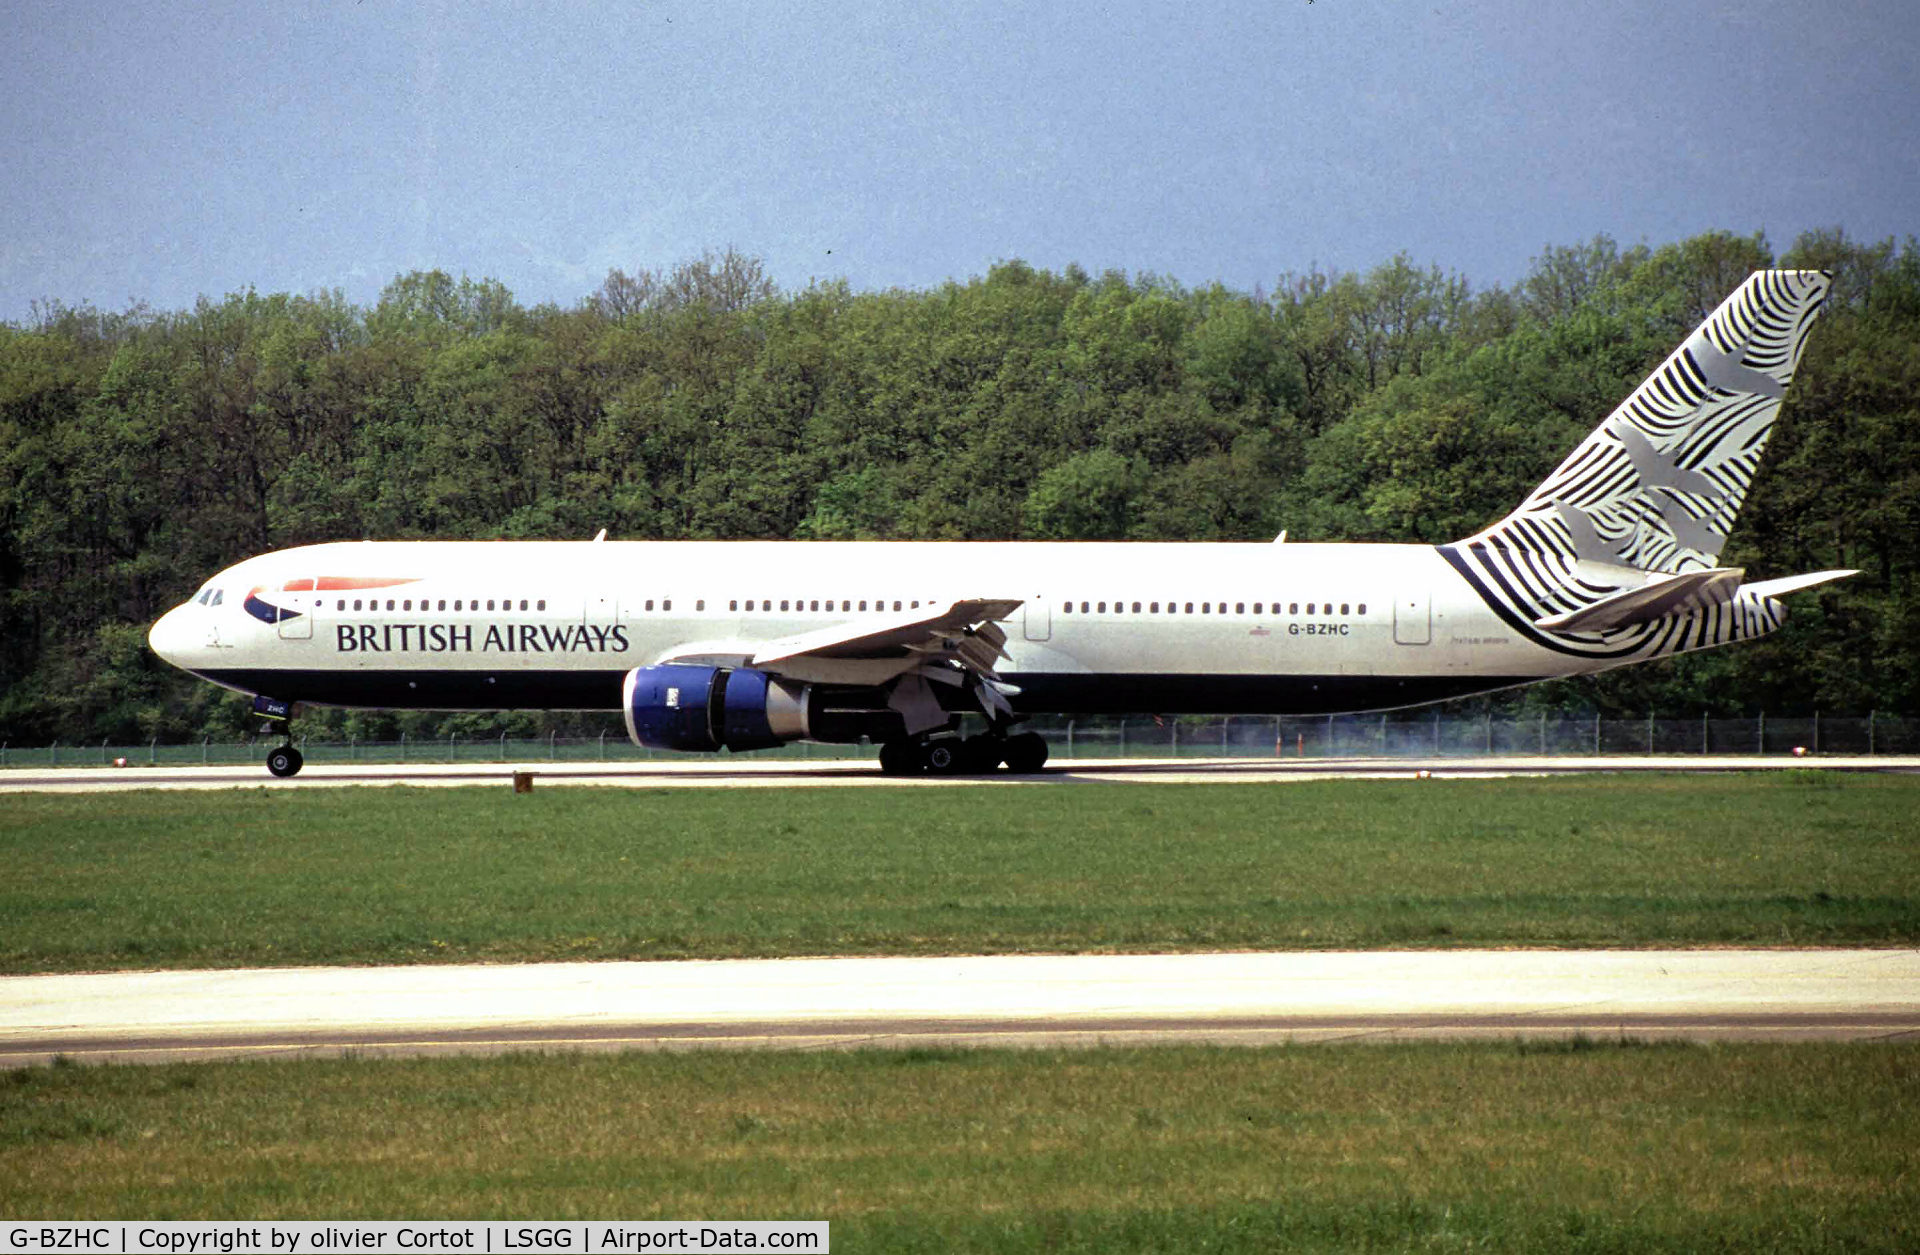 G-BZHC, 1998 Boeing 767-336 C/N 29232, Geneve airport in 2003